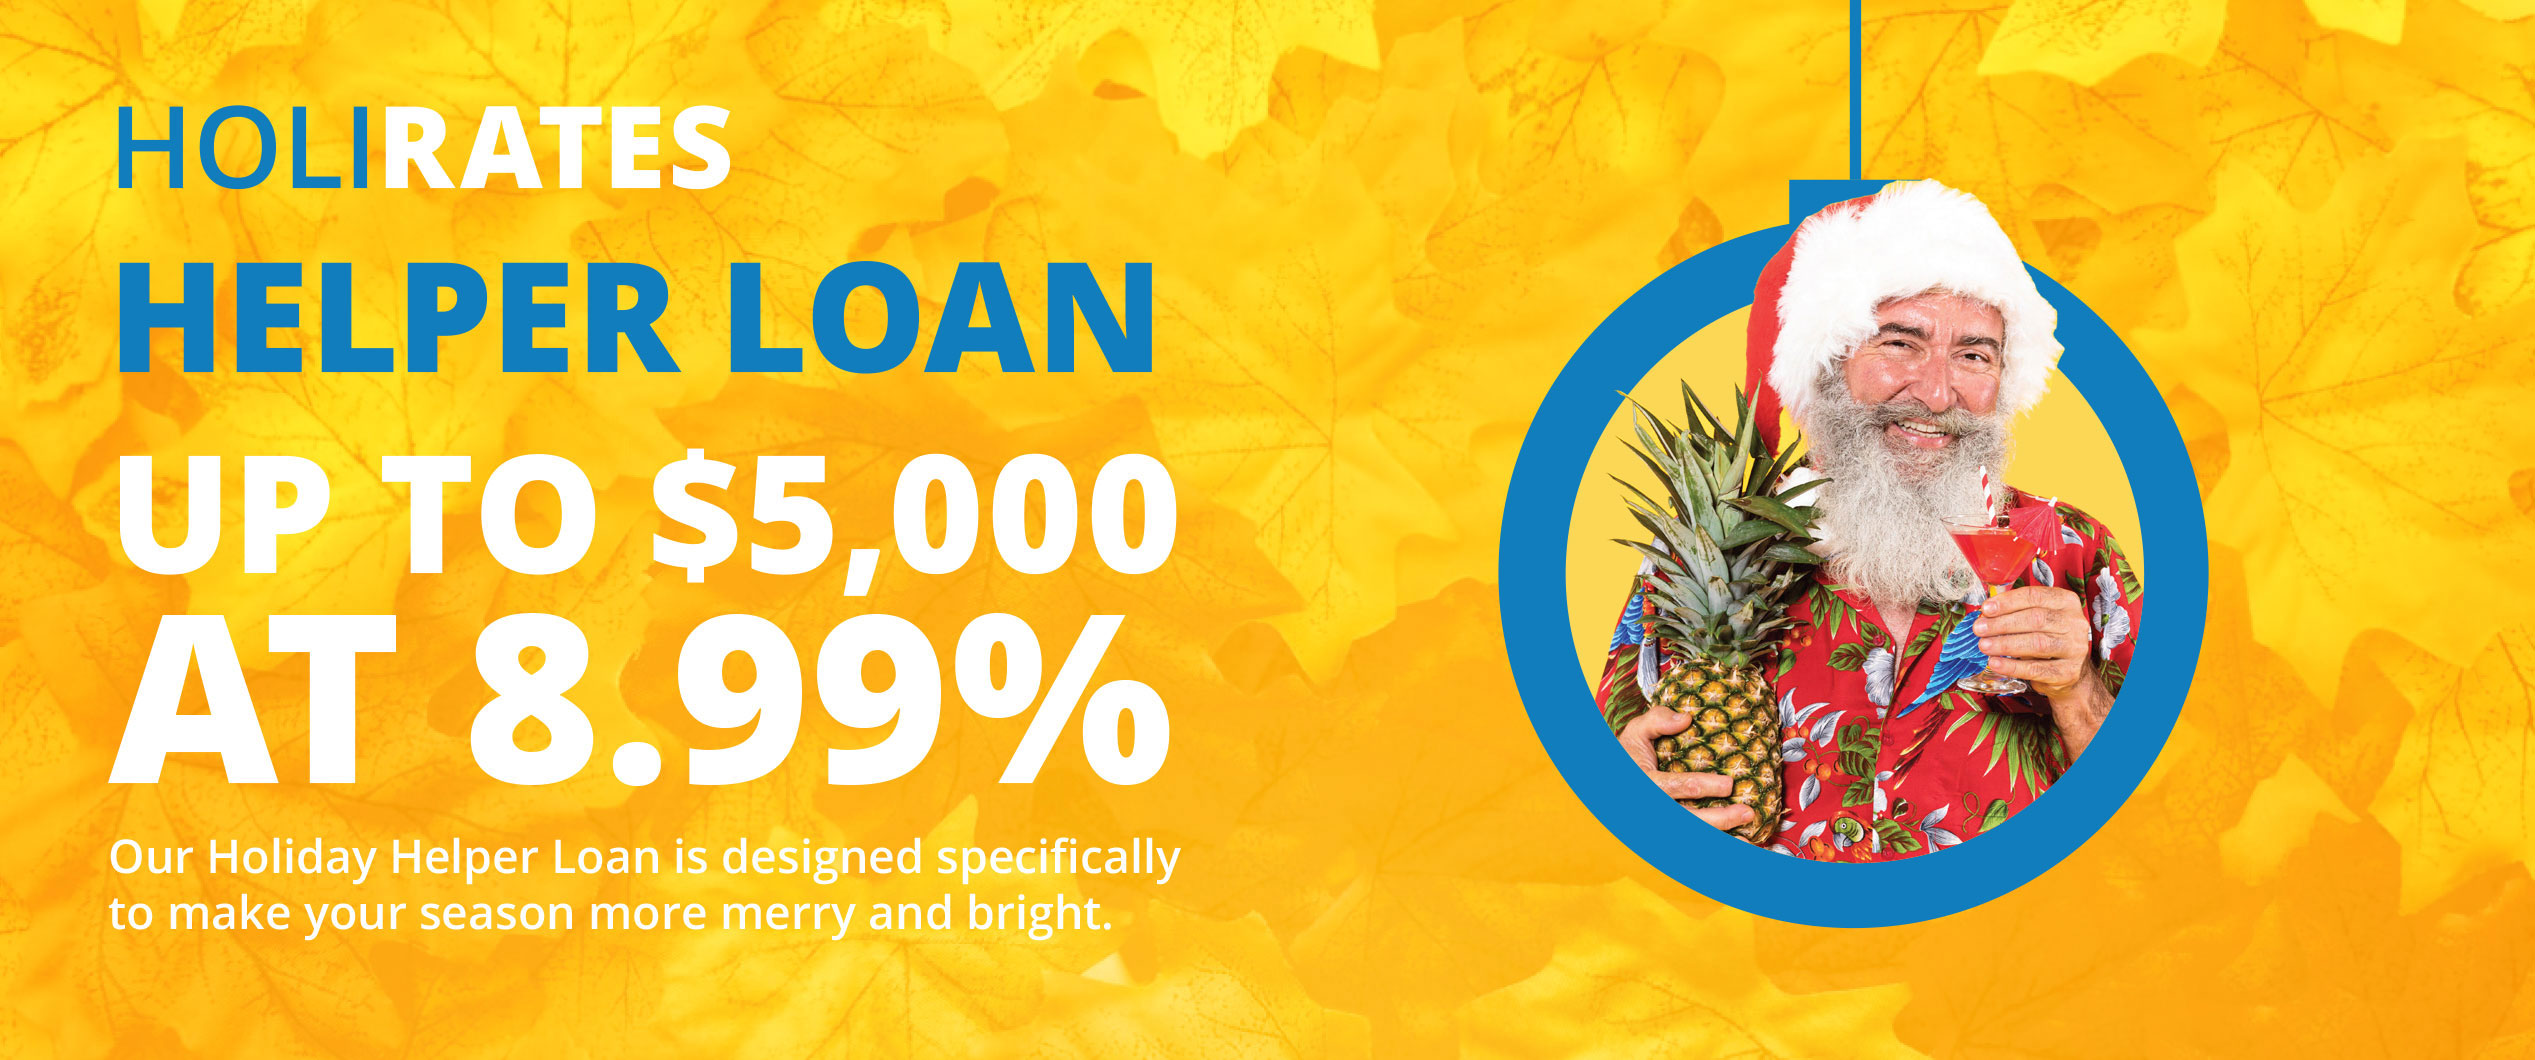 HoliRates helper loans at 8.99% APR